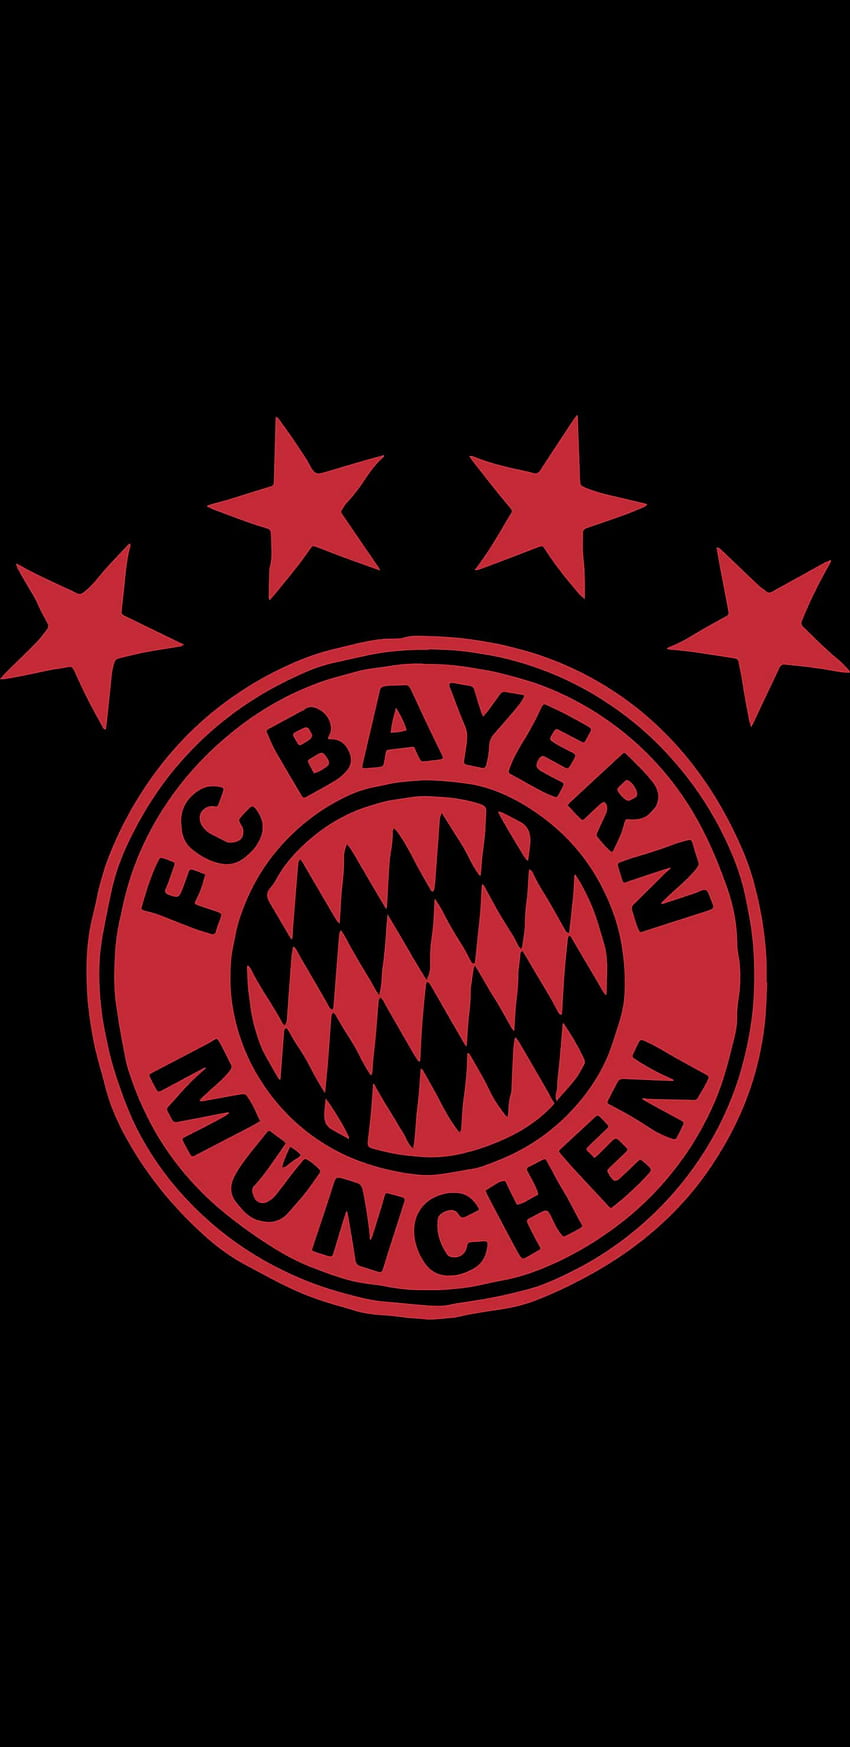 Bayern Munchen wallpaper ponsel HD